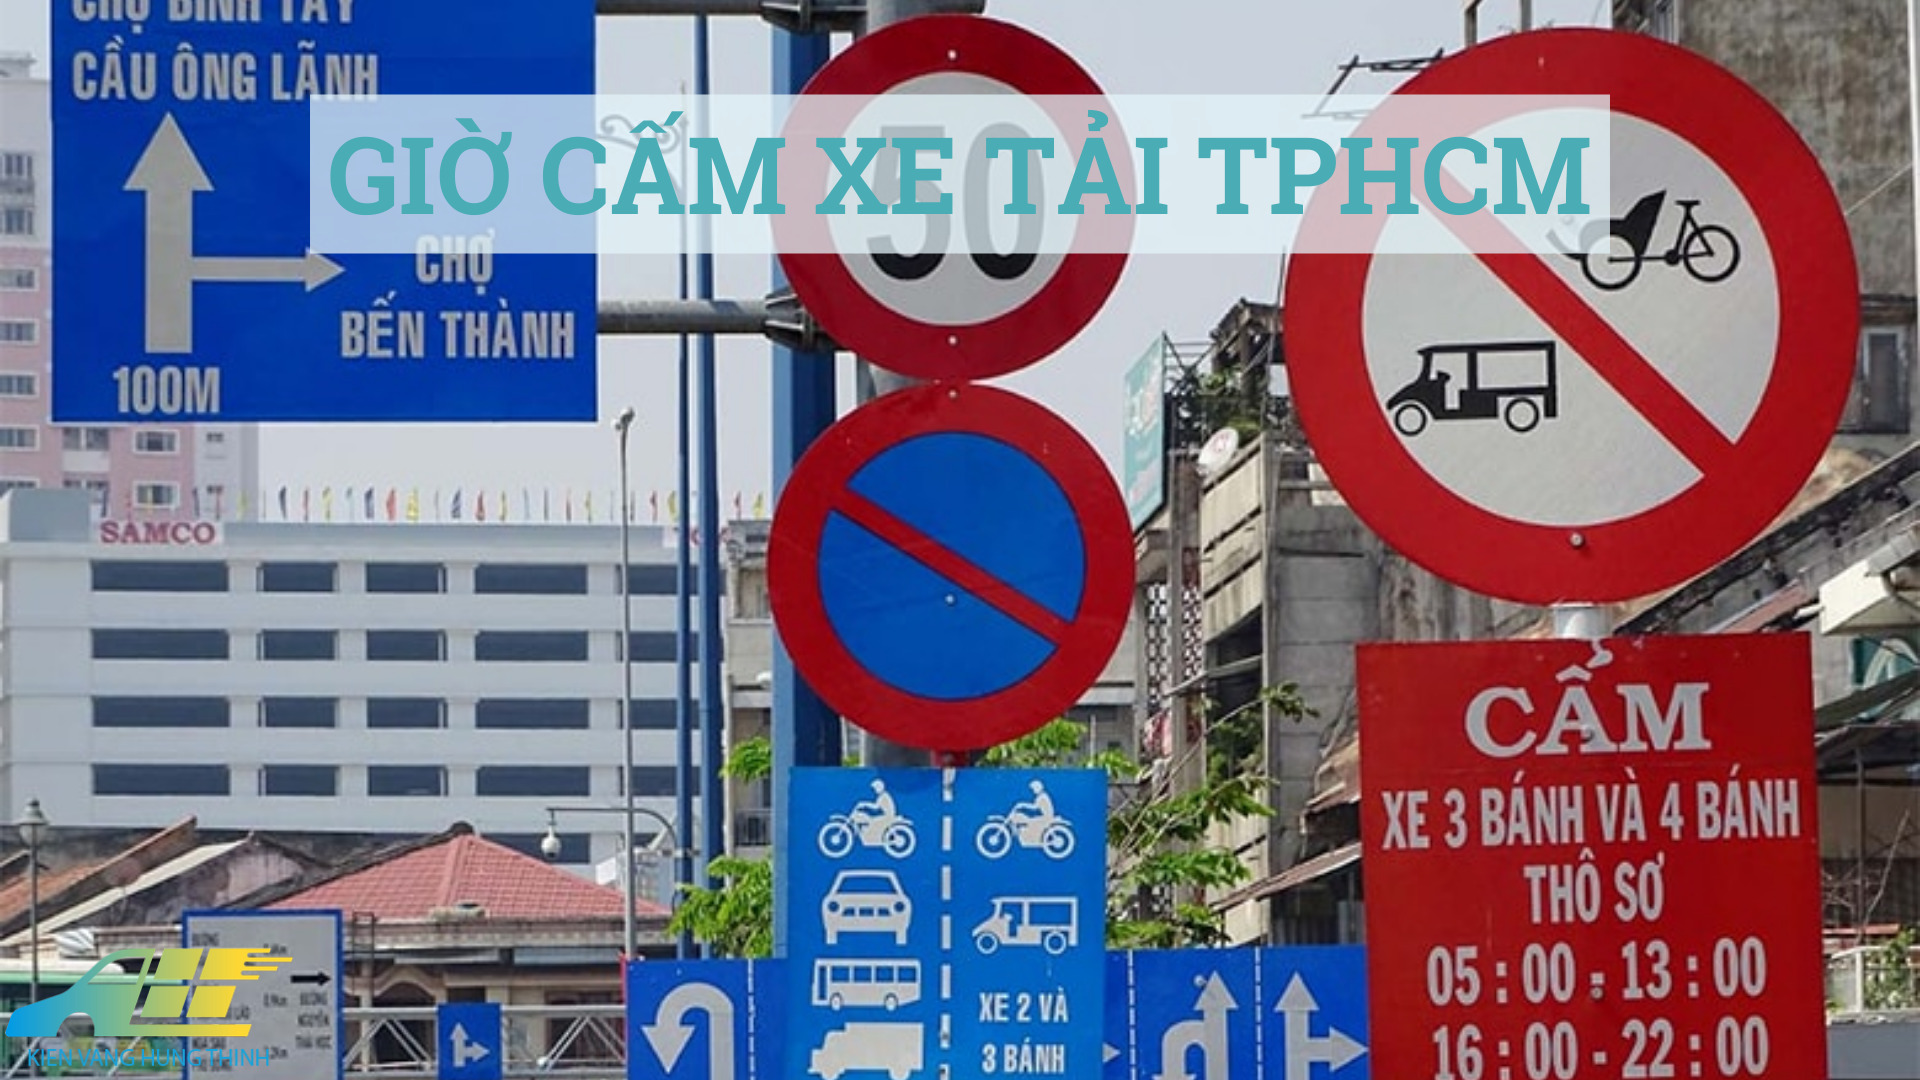 Giờ cấm xe tải TPHCM